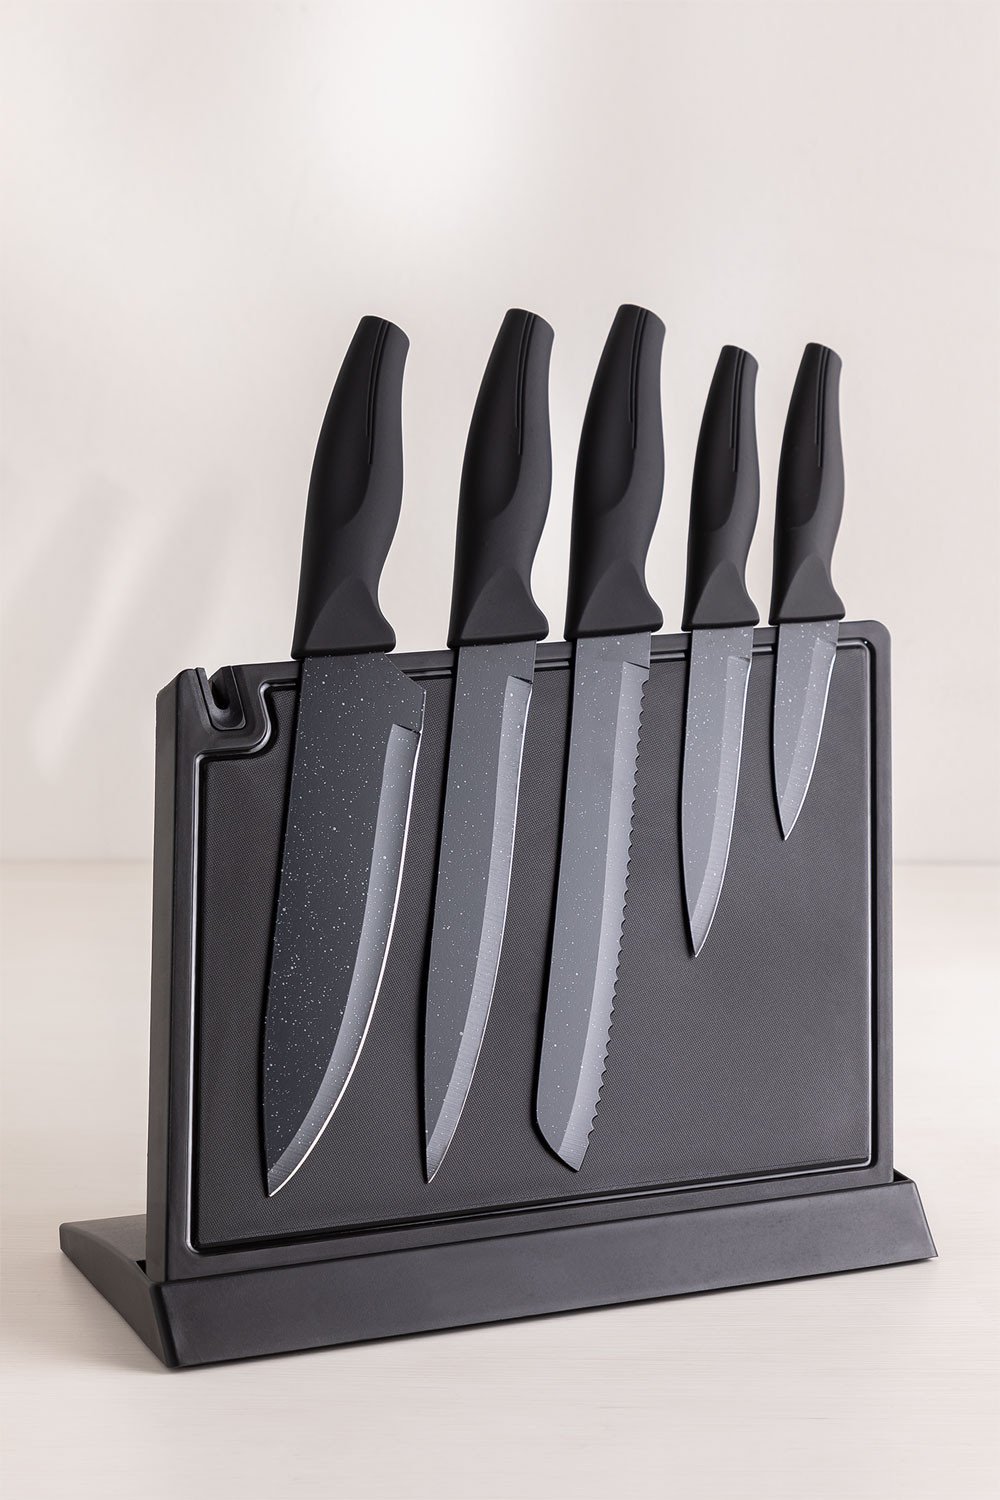 Cobo Kitchen Knives Set, gallery image 1